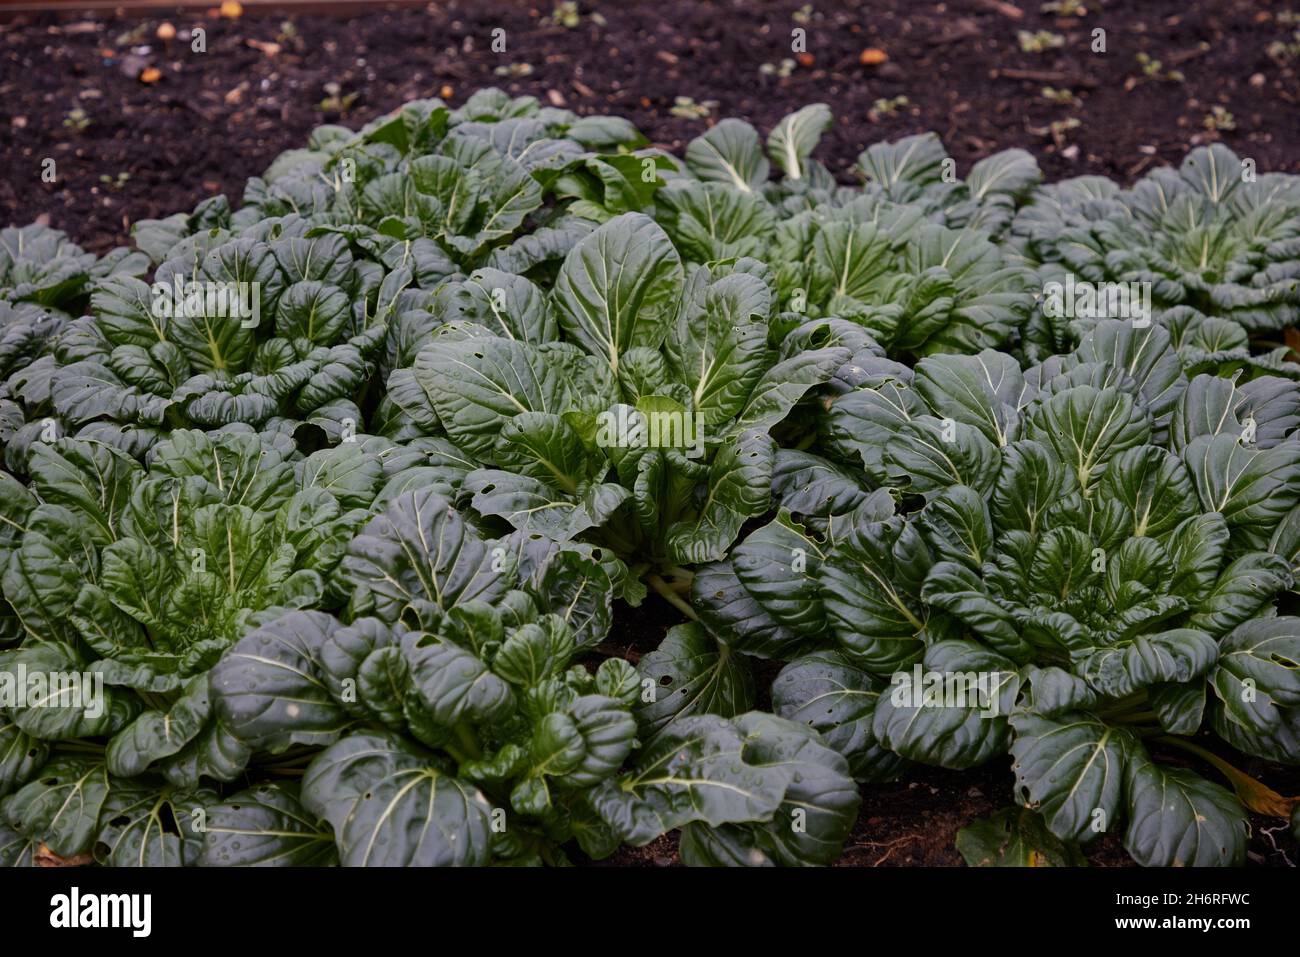 Winter vegetable Tatsoi Rosette Pak Choi plants with shiny salad leaves. Stock Photo